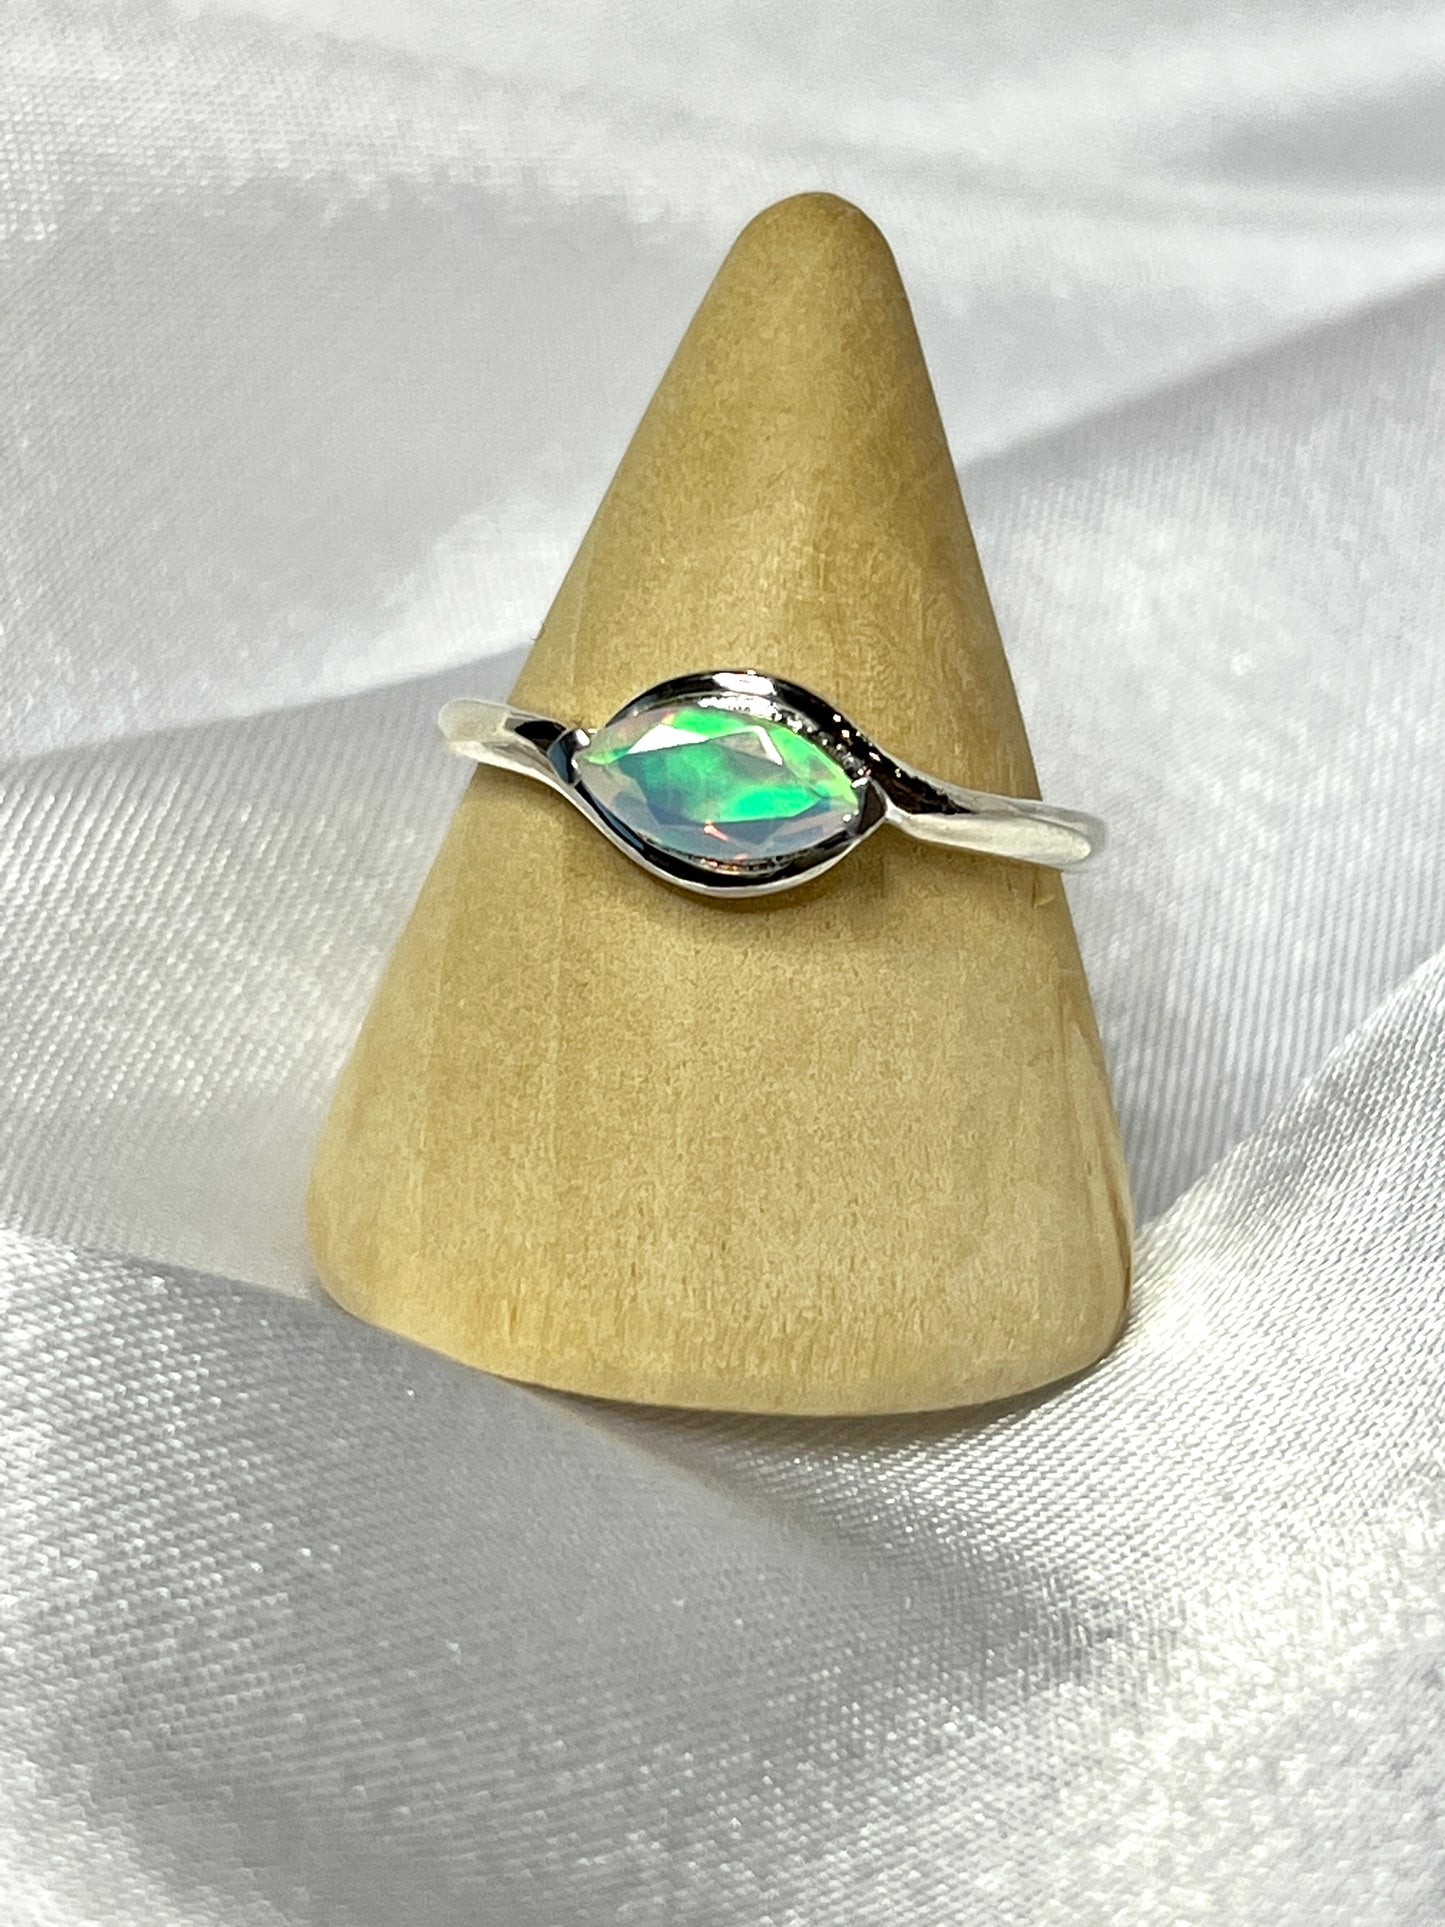 An elegant Brilliant Facet Cut Ethiopian Opal Ring featuring a stunning Ethiopian opal stone on top.